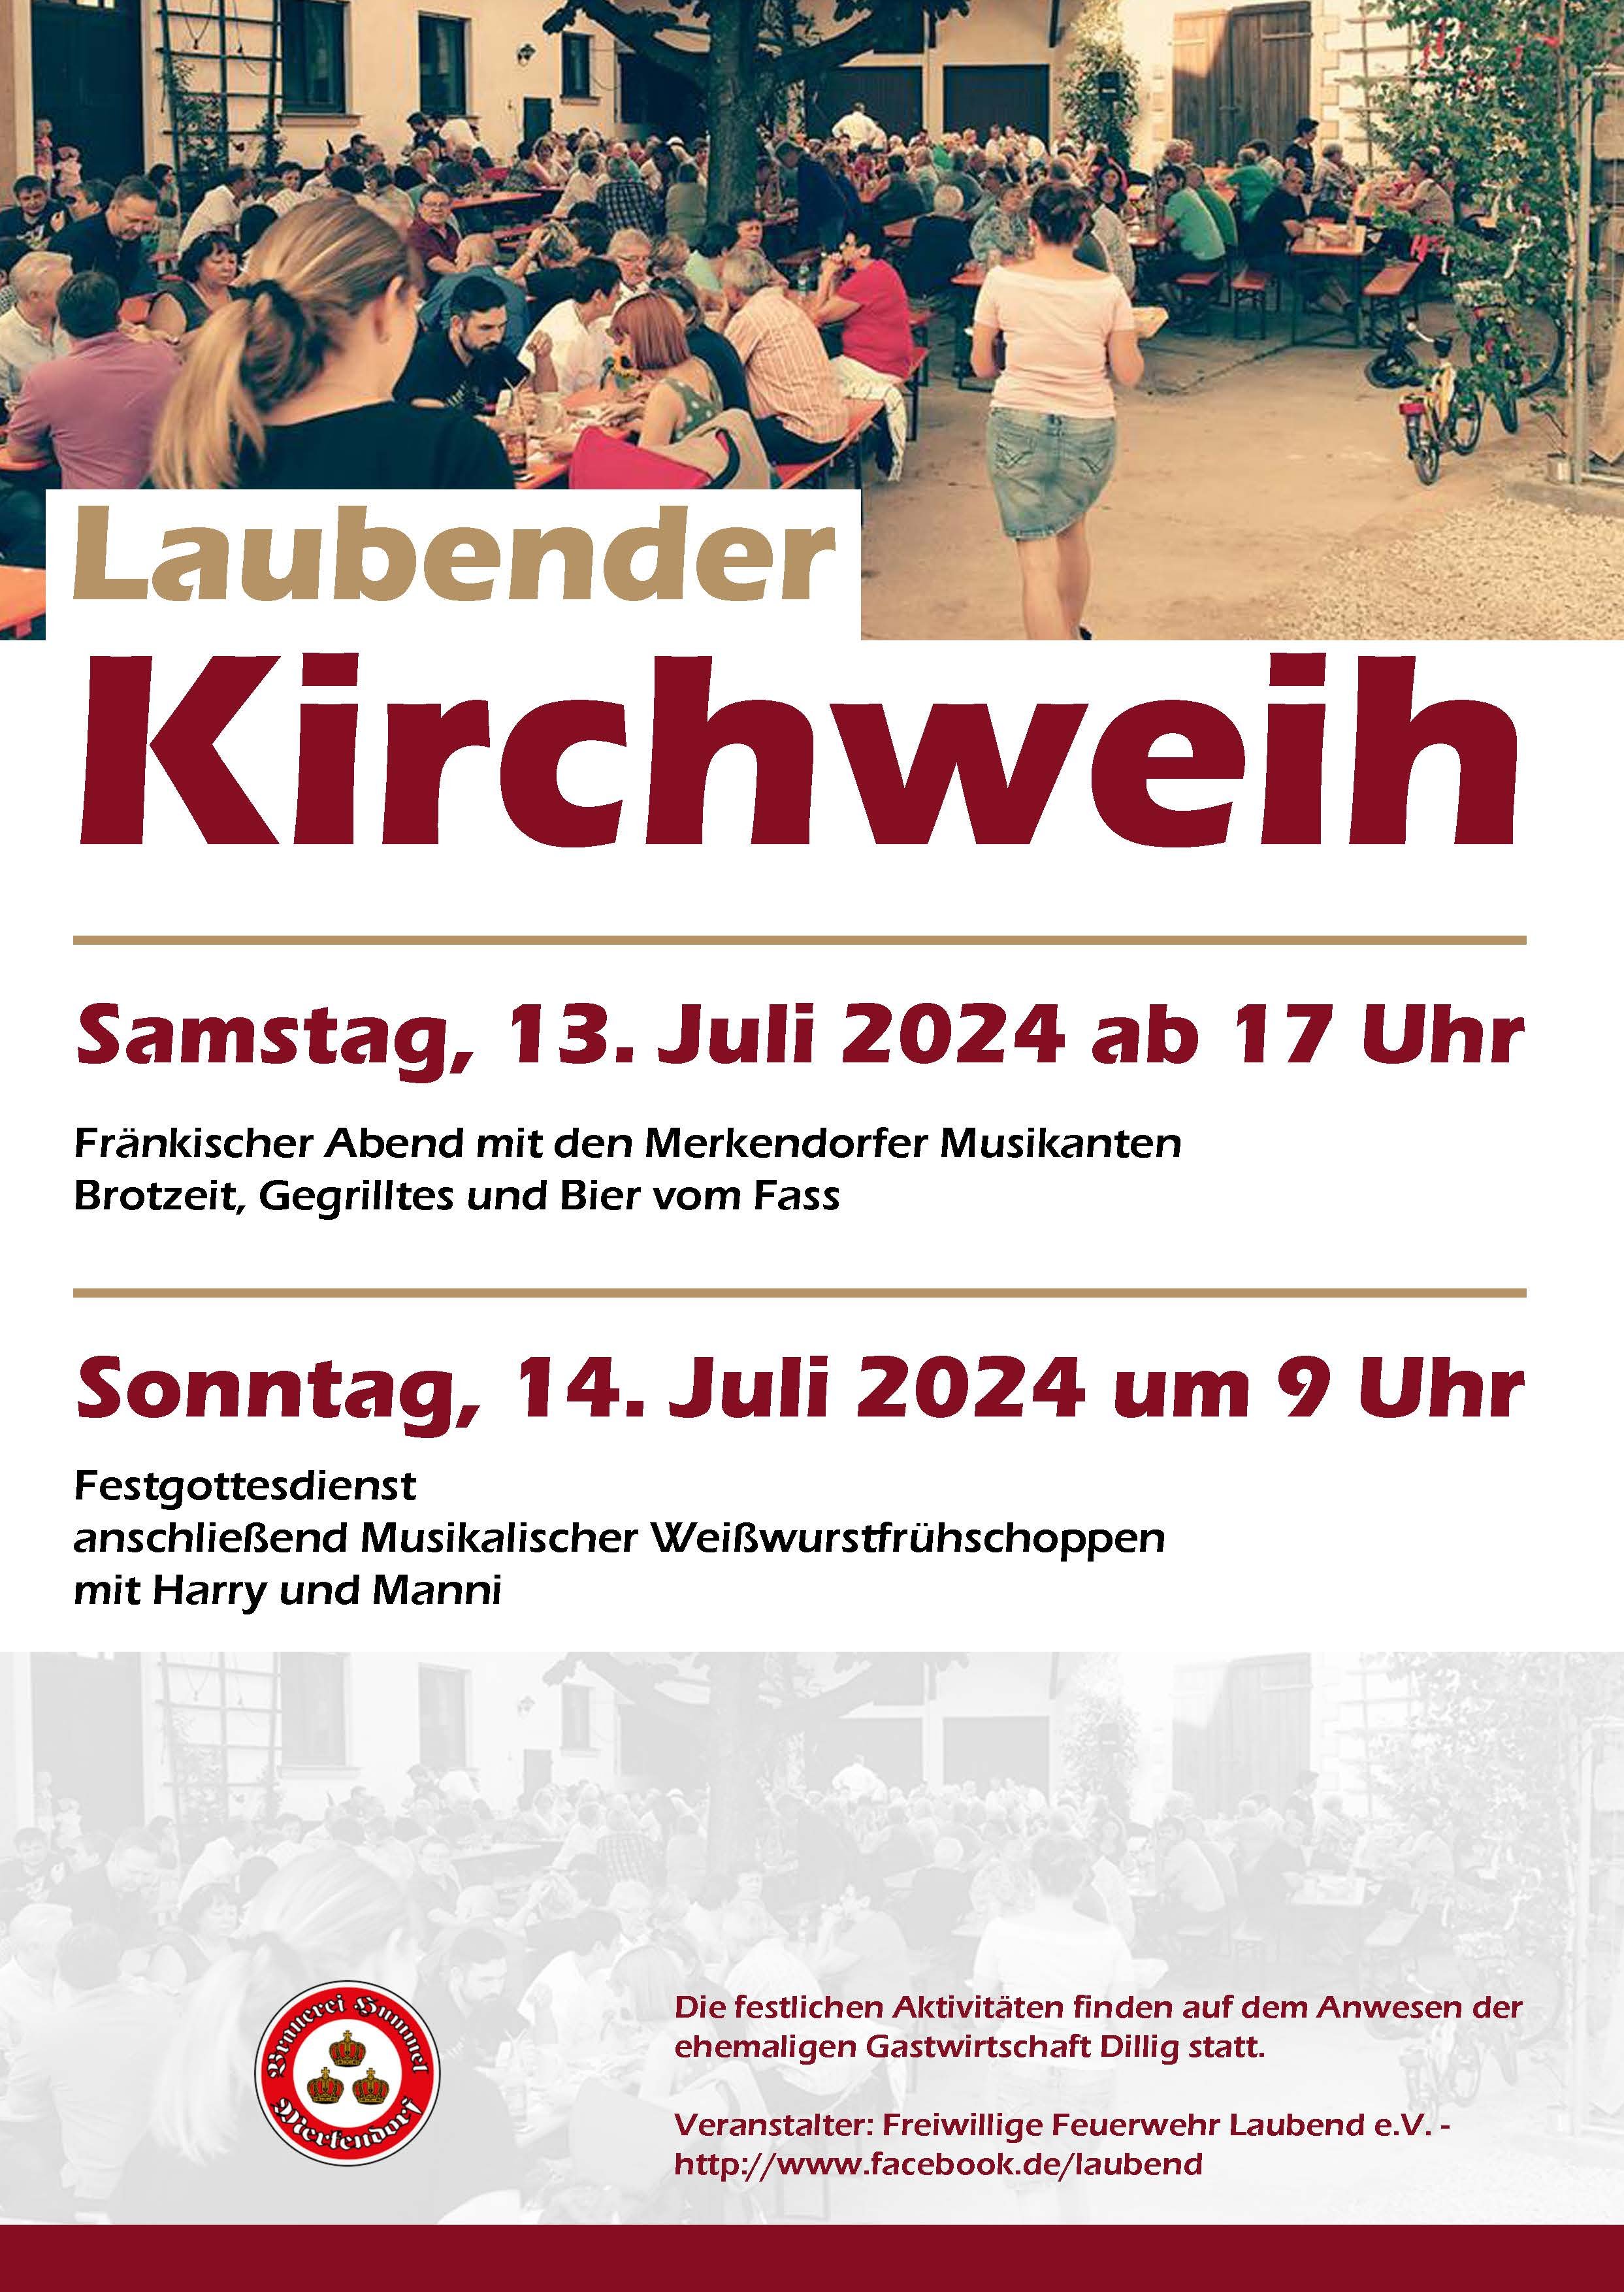 Laubender Kirchweih